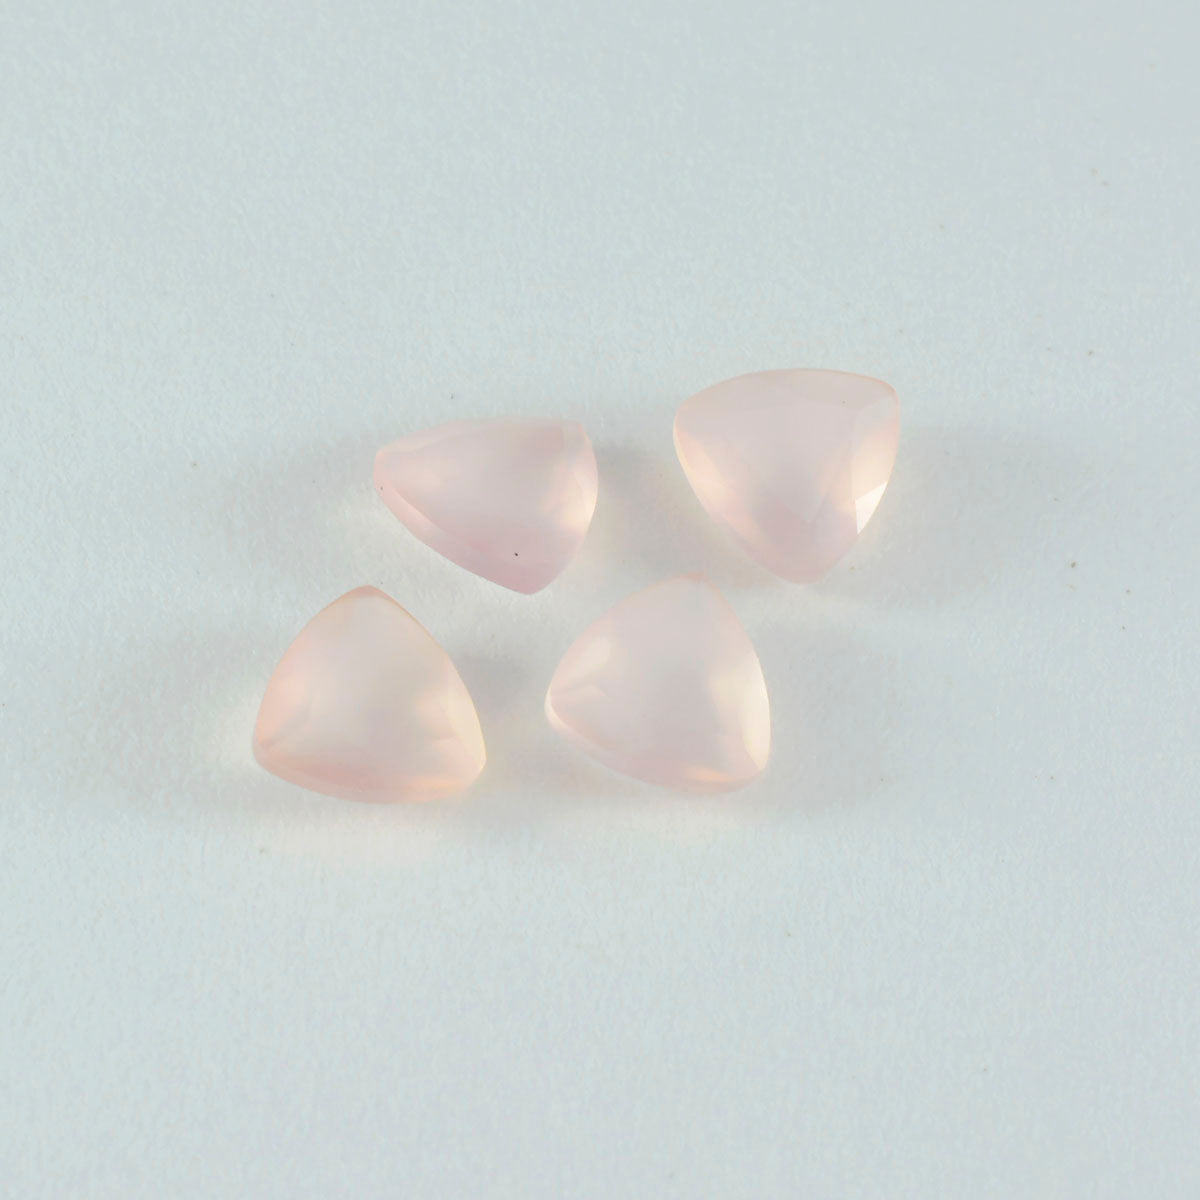 Riyogems 1PC Pink Rose Quartz Faceted 8x8 mm Trillion Shape AAA Quality Loose Stone